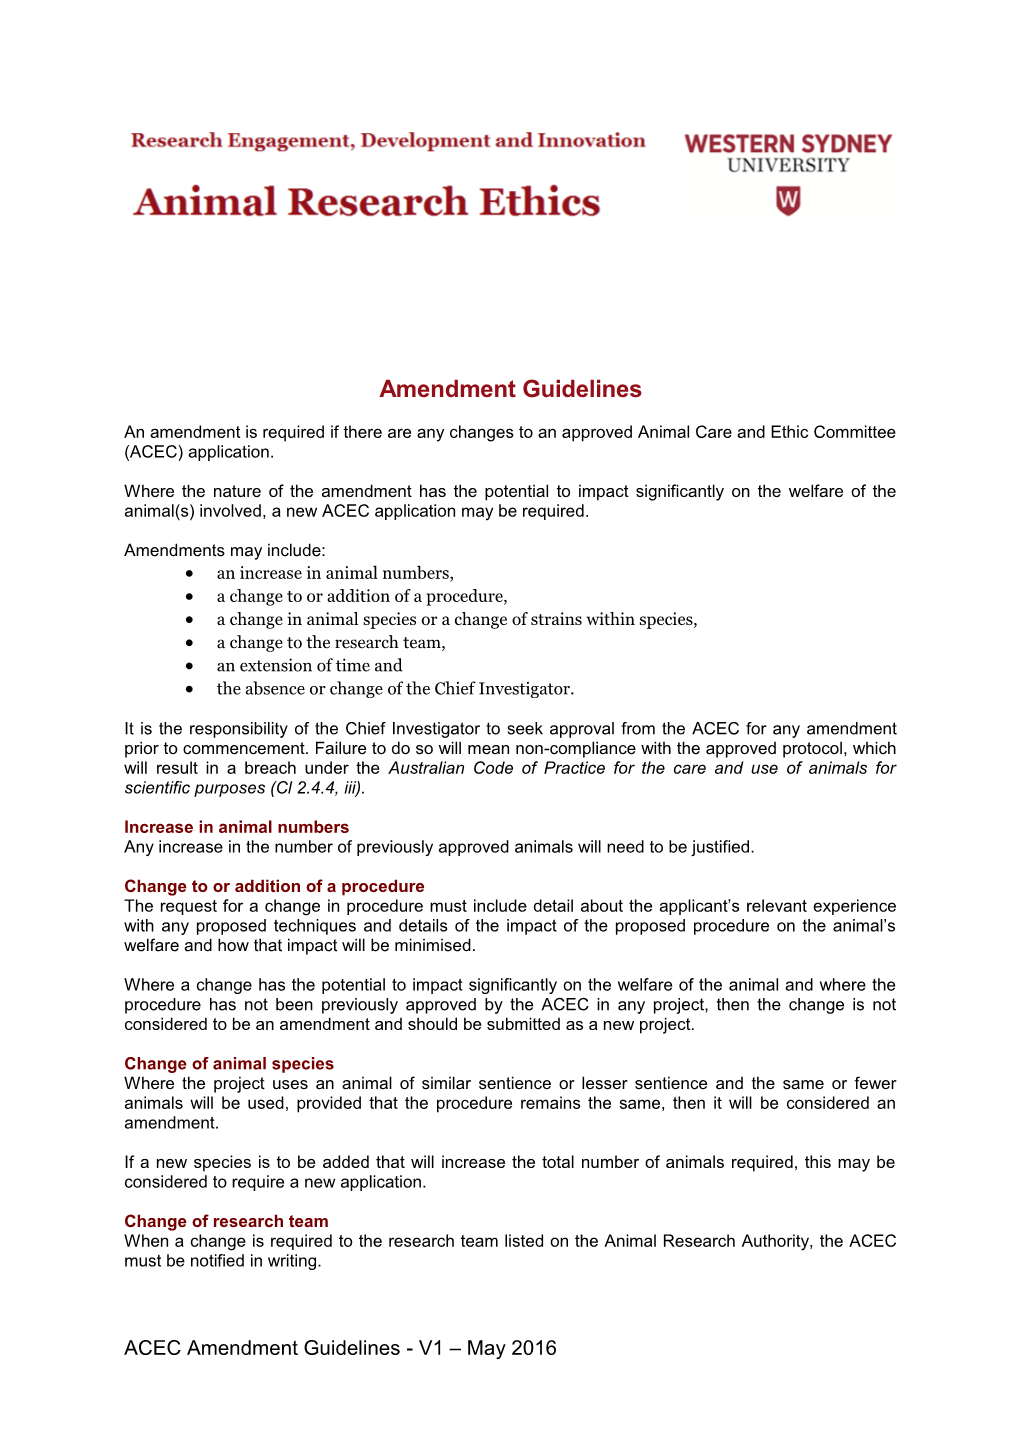 Amendment Guidelines